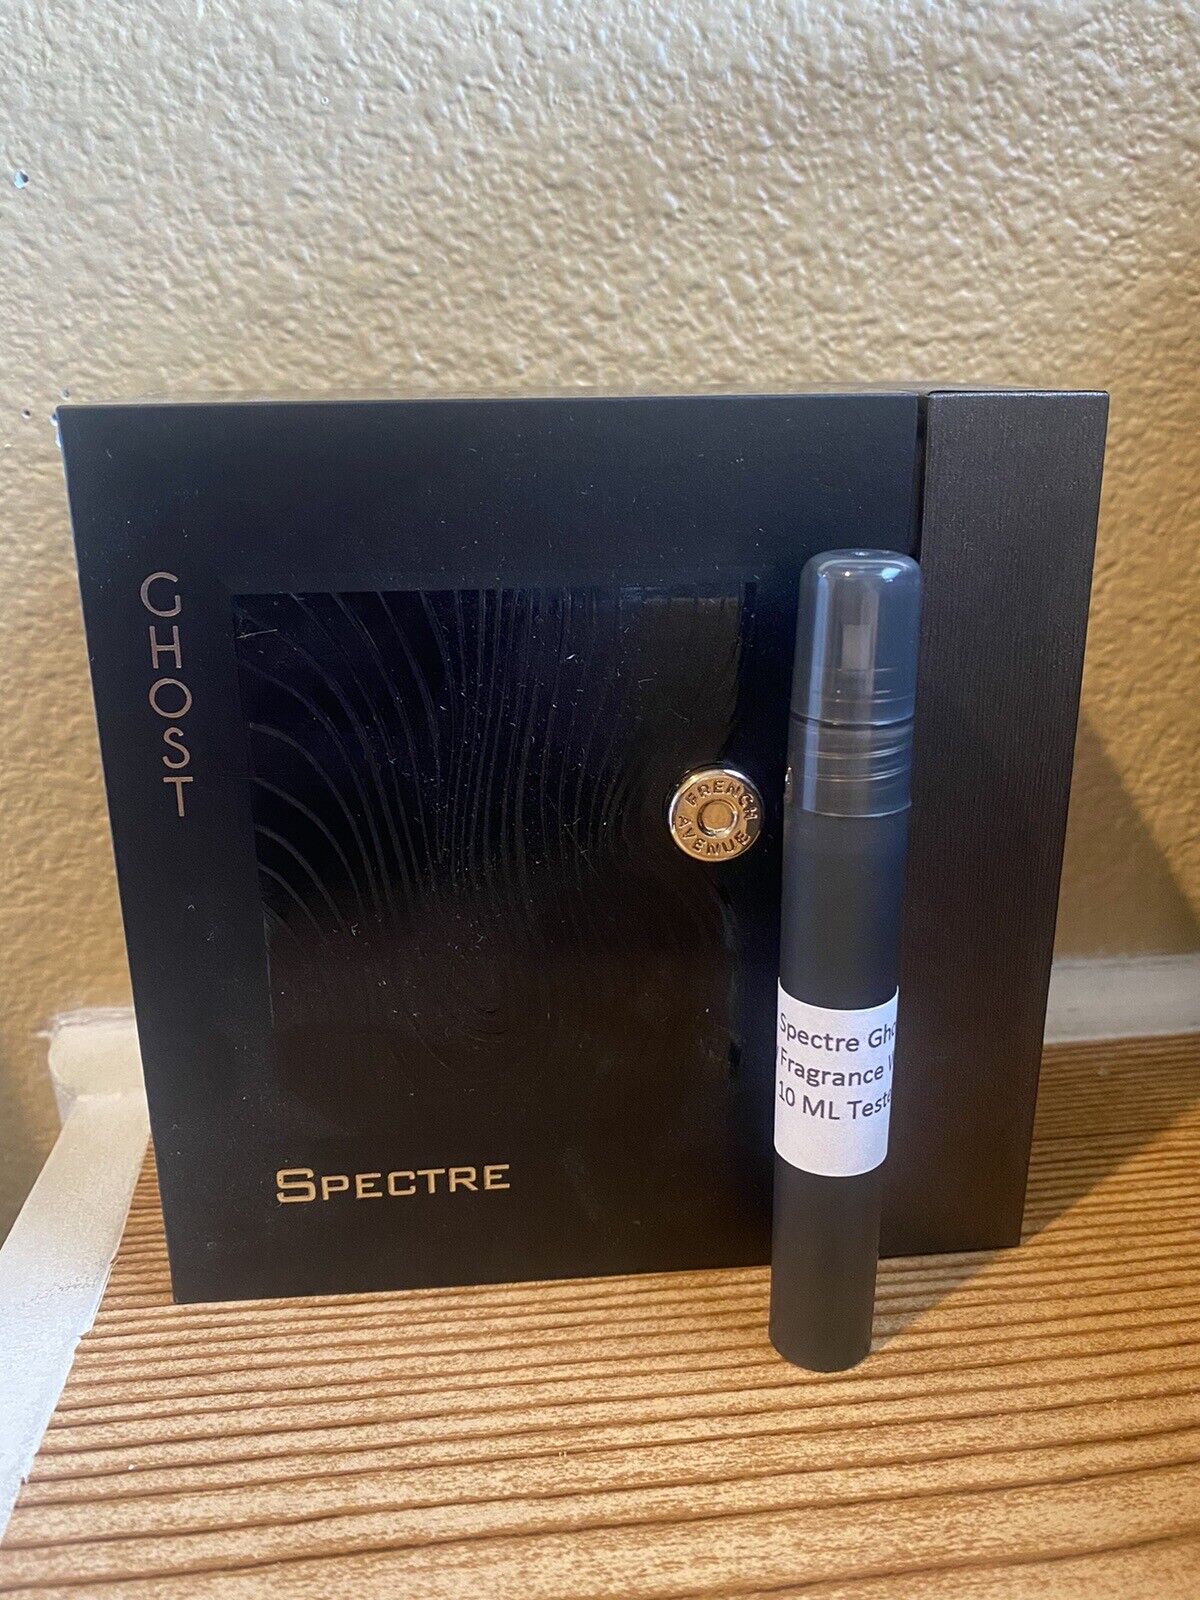 Fragrance World Spectre Ghost Eau De Parfum Spray 10ML Tester